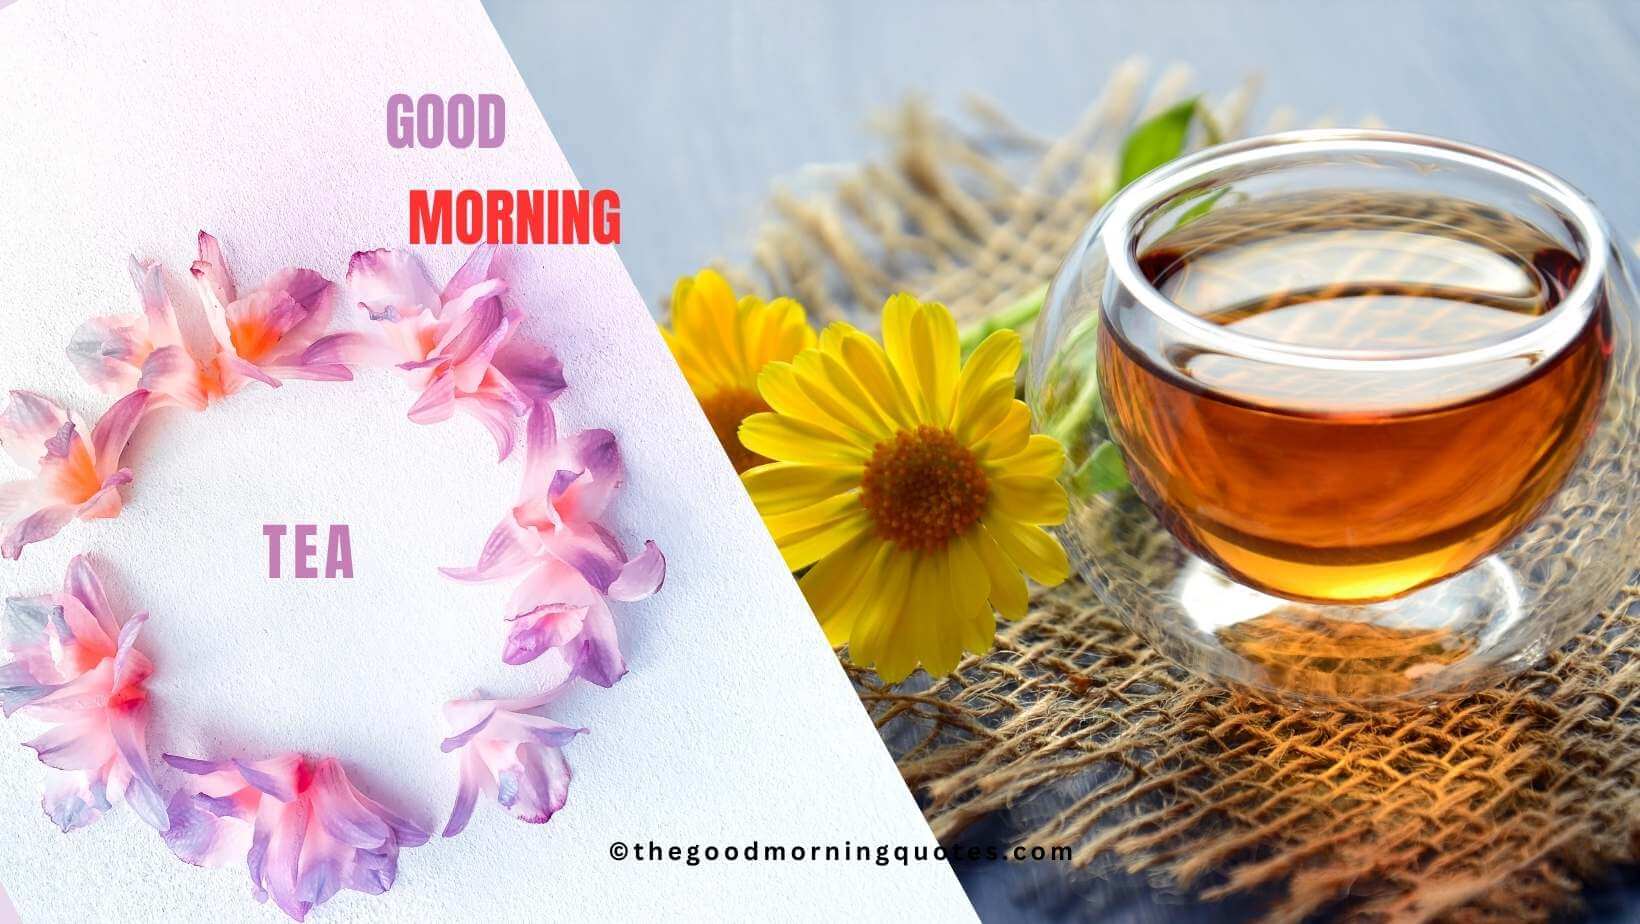 Good Morning Tea Quotes in Hindi